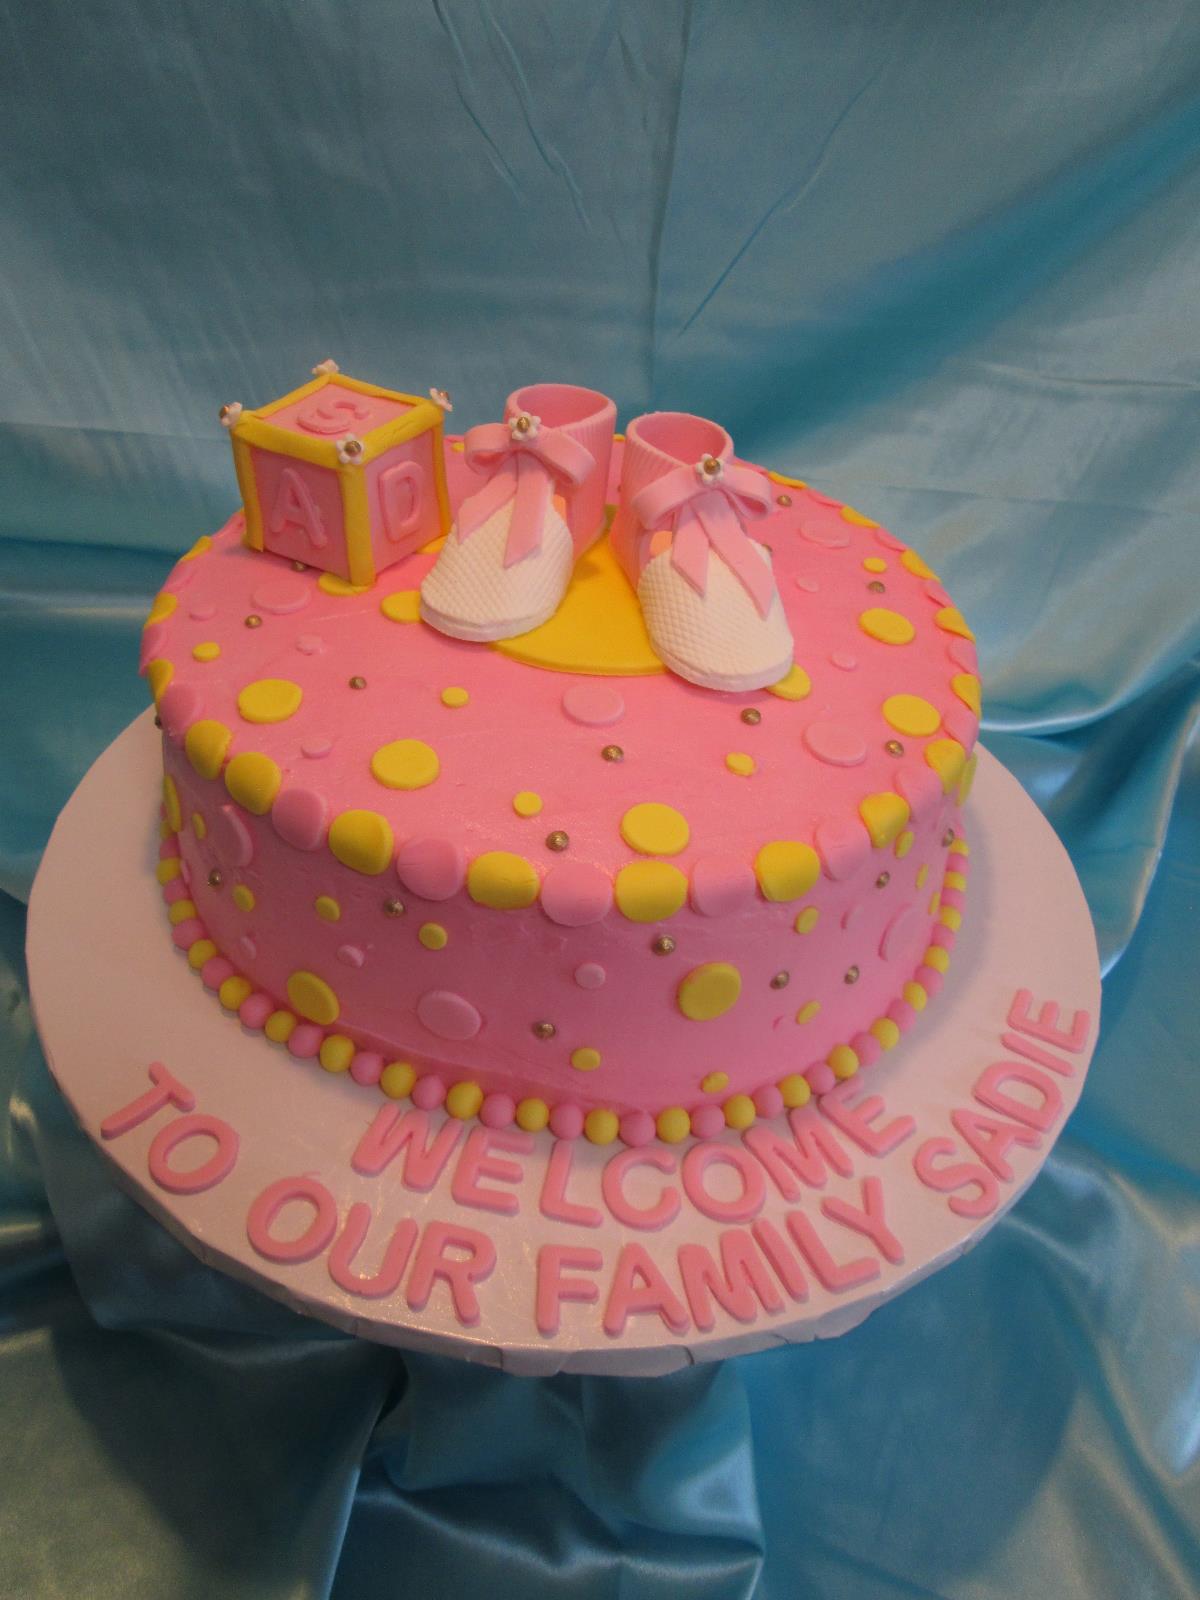 Baby welcome cake - Decorated Cake by Tsanko Yurukov - CakesDecor